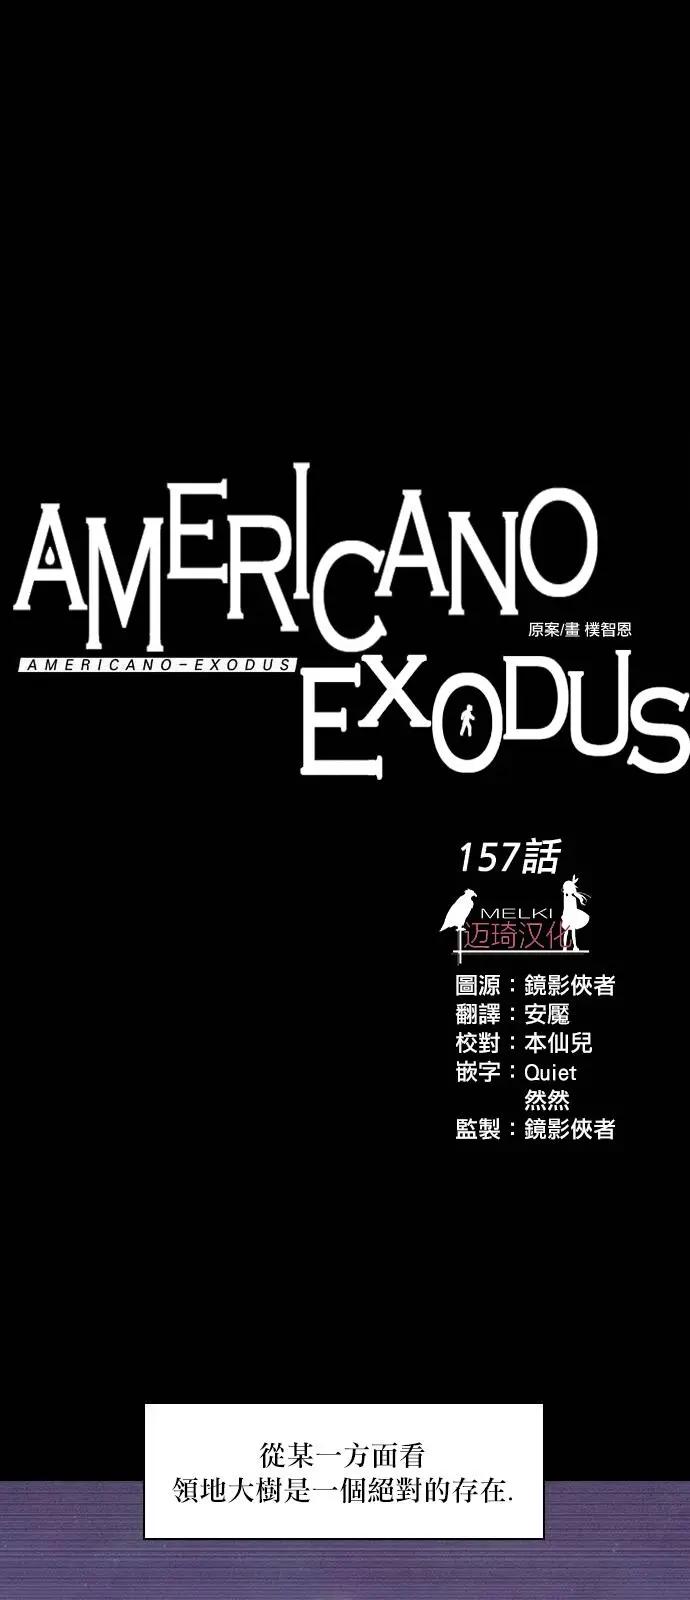 Americano-exodus - 第157回 - 1